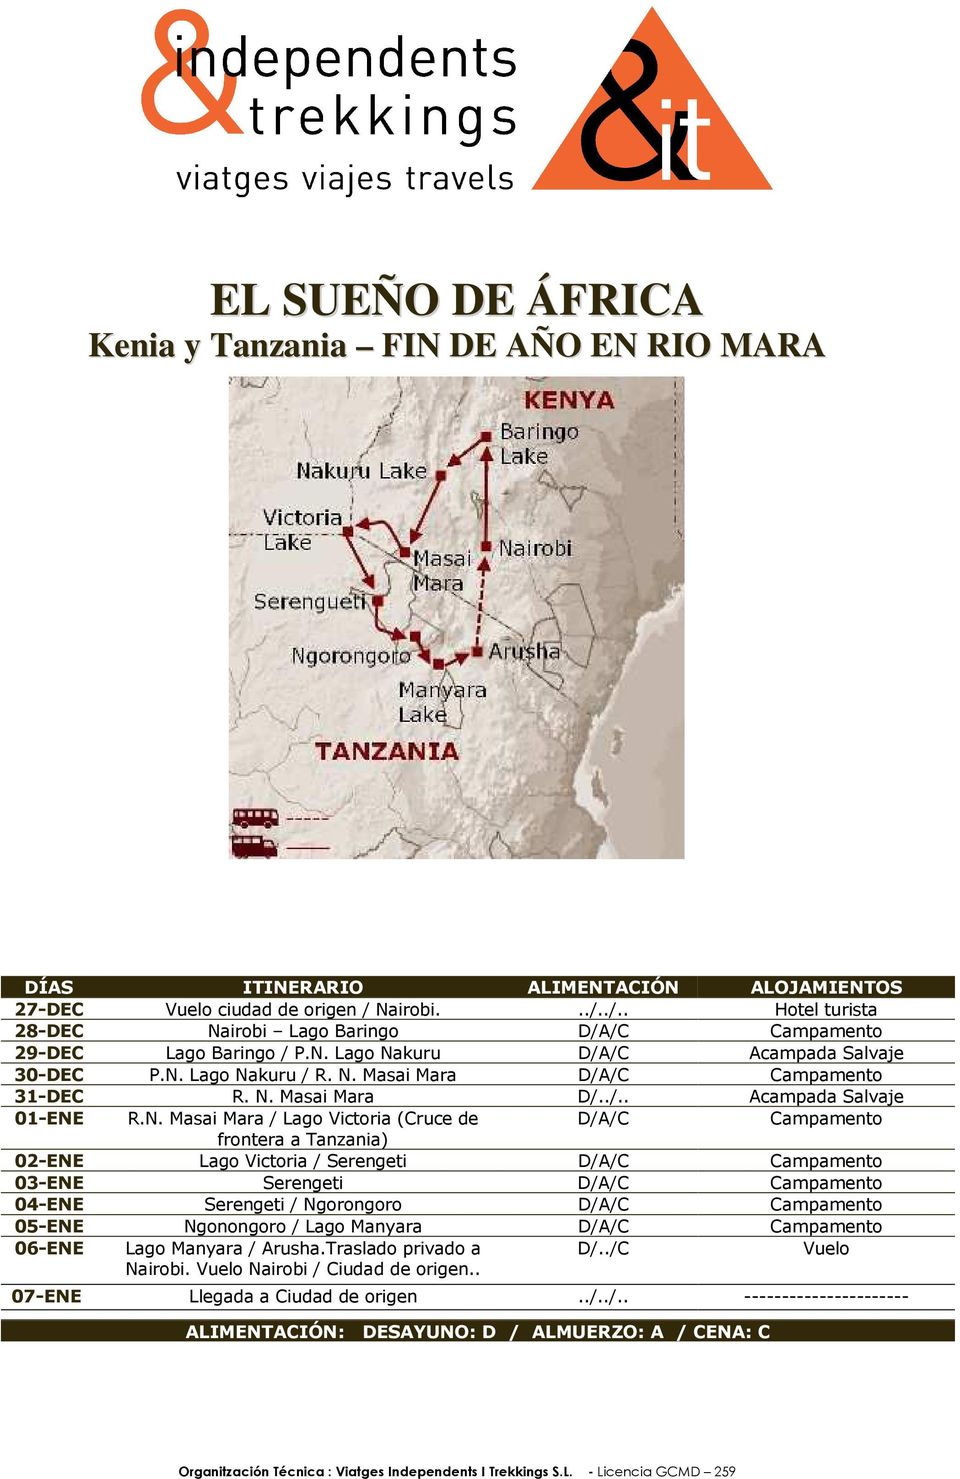 N. Masai Mara D/../.. Acampada Salvaje 01-ENE R.N. Masai Mara / Lago Victoria (Cruce de D/A/C Campamento frontera a Tanzania) 02-ENE Lago Victoria / Serengeti D/A/C Campamento 03-ENE Serengeti D/A/C